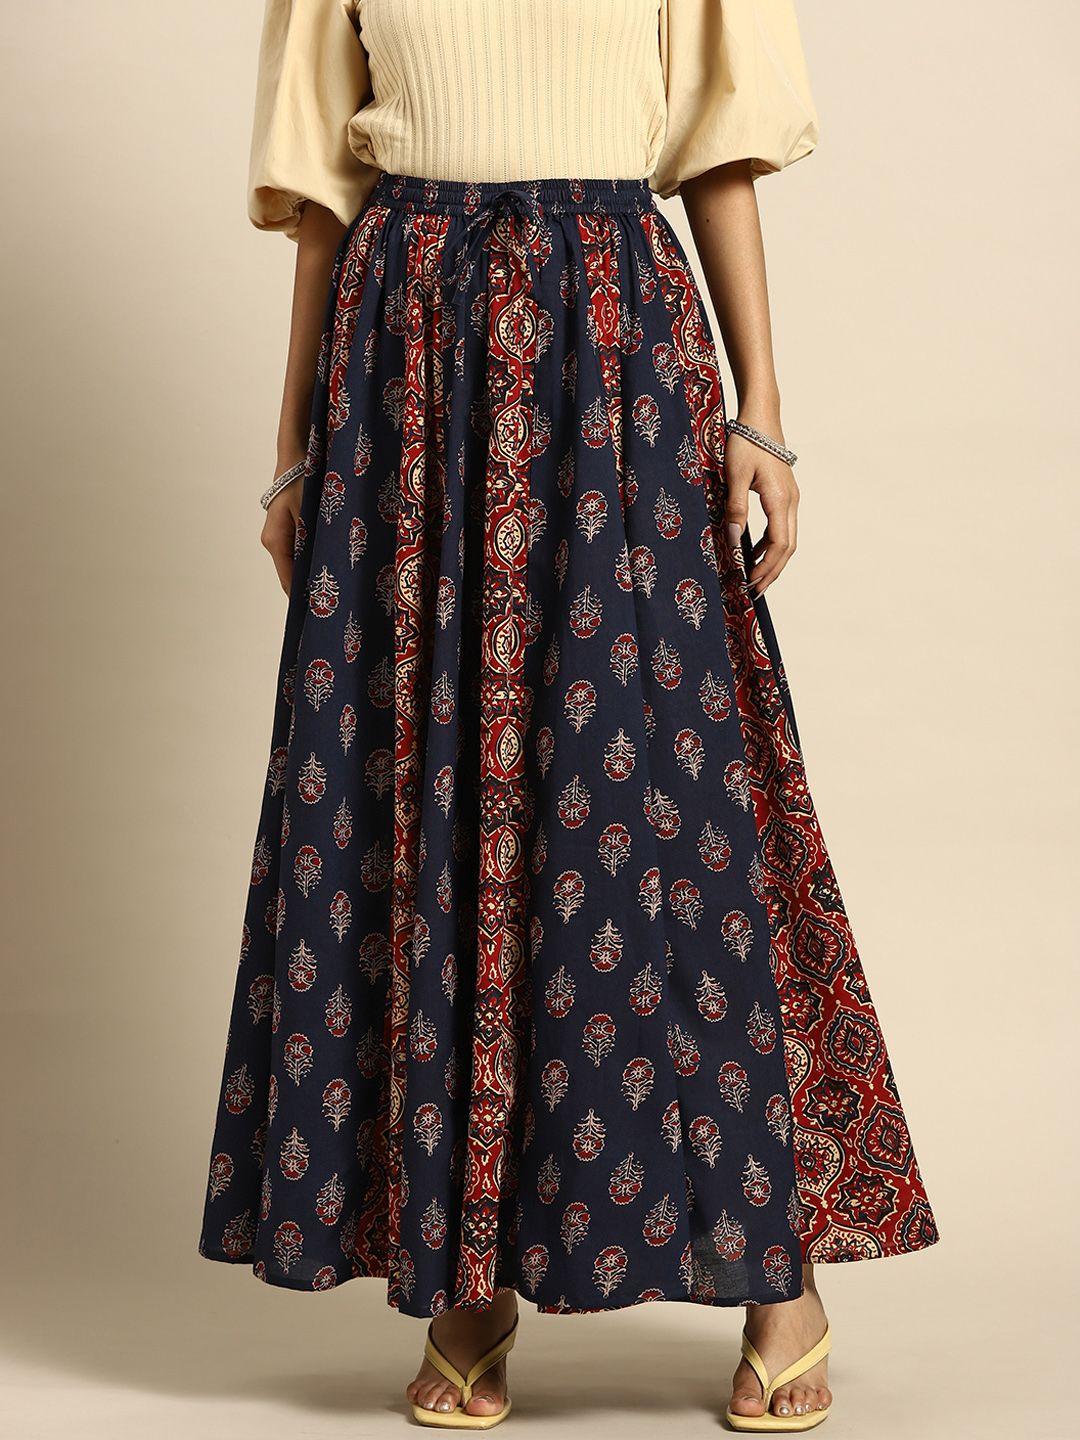 anayna women navy blue & maroon printed flared cotton maxi skirt